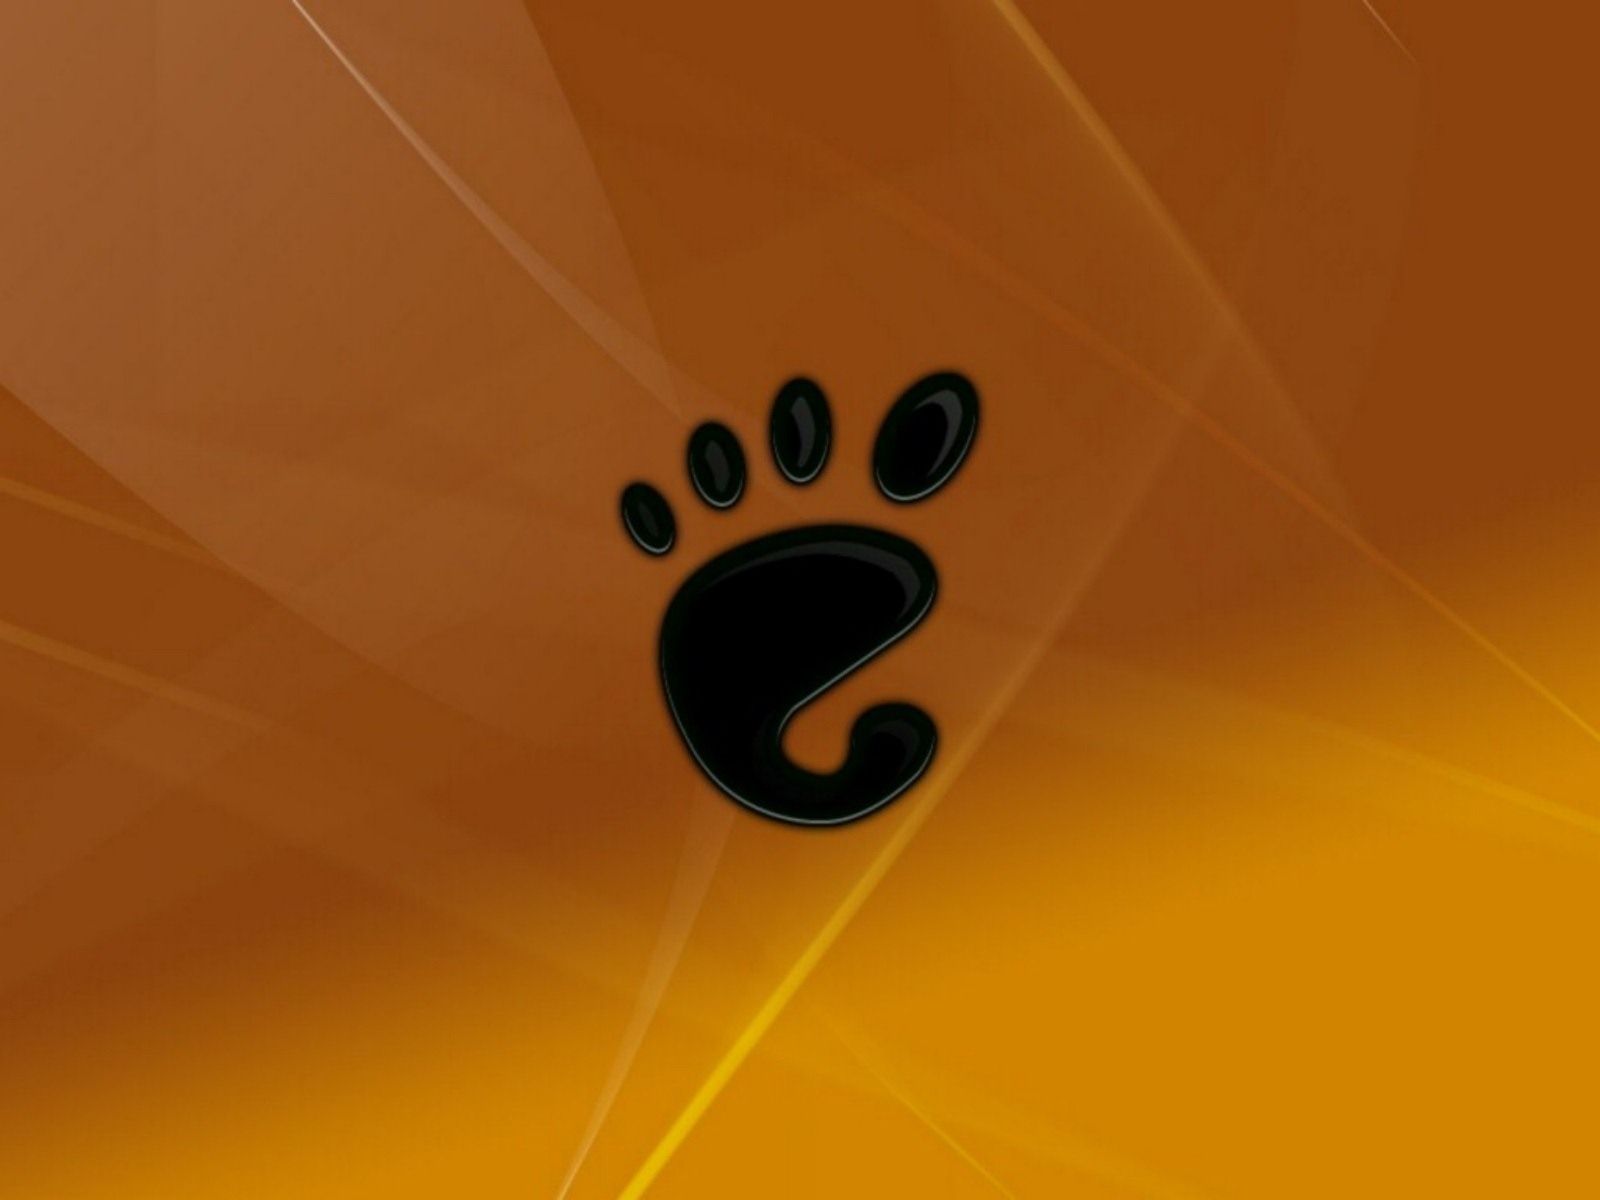 Foot on Windows Desktop Gnome Foot Wallpaper Linux - 1600x1200 ...